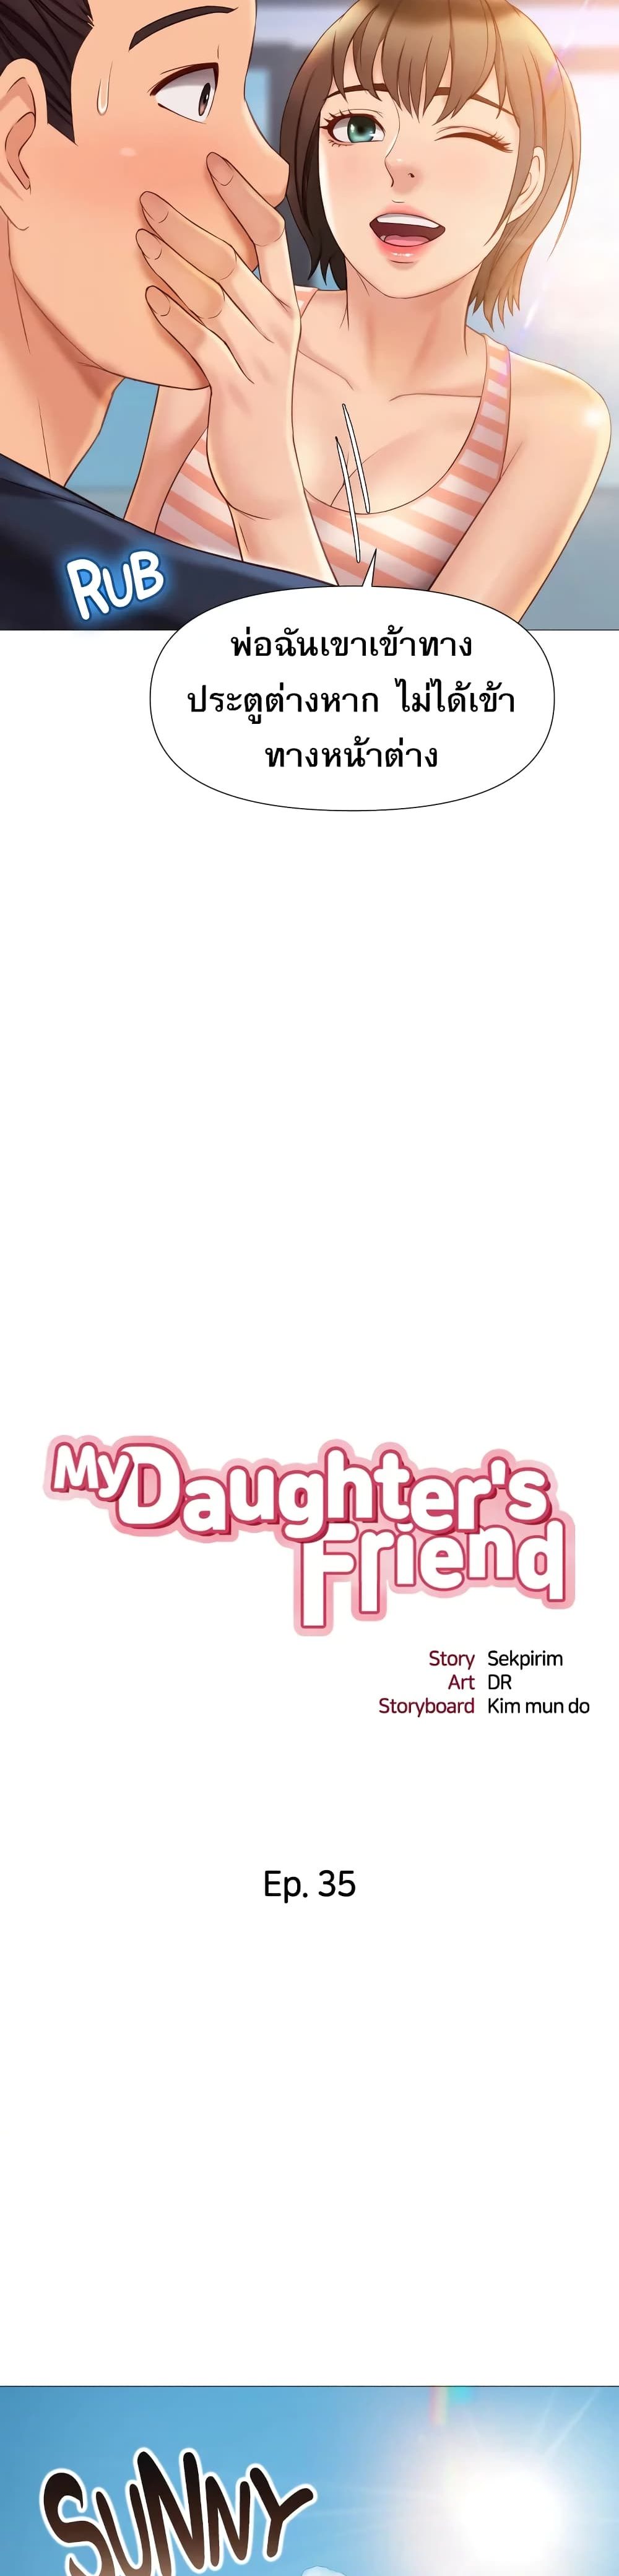 Daughter Friend 35 09